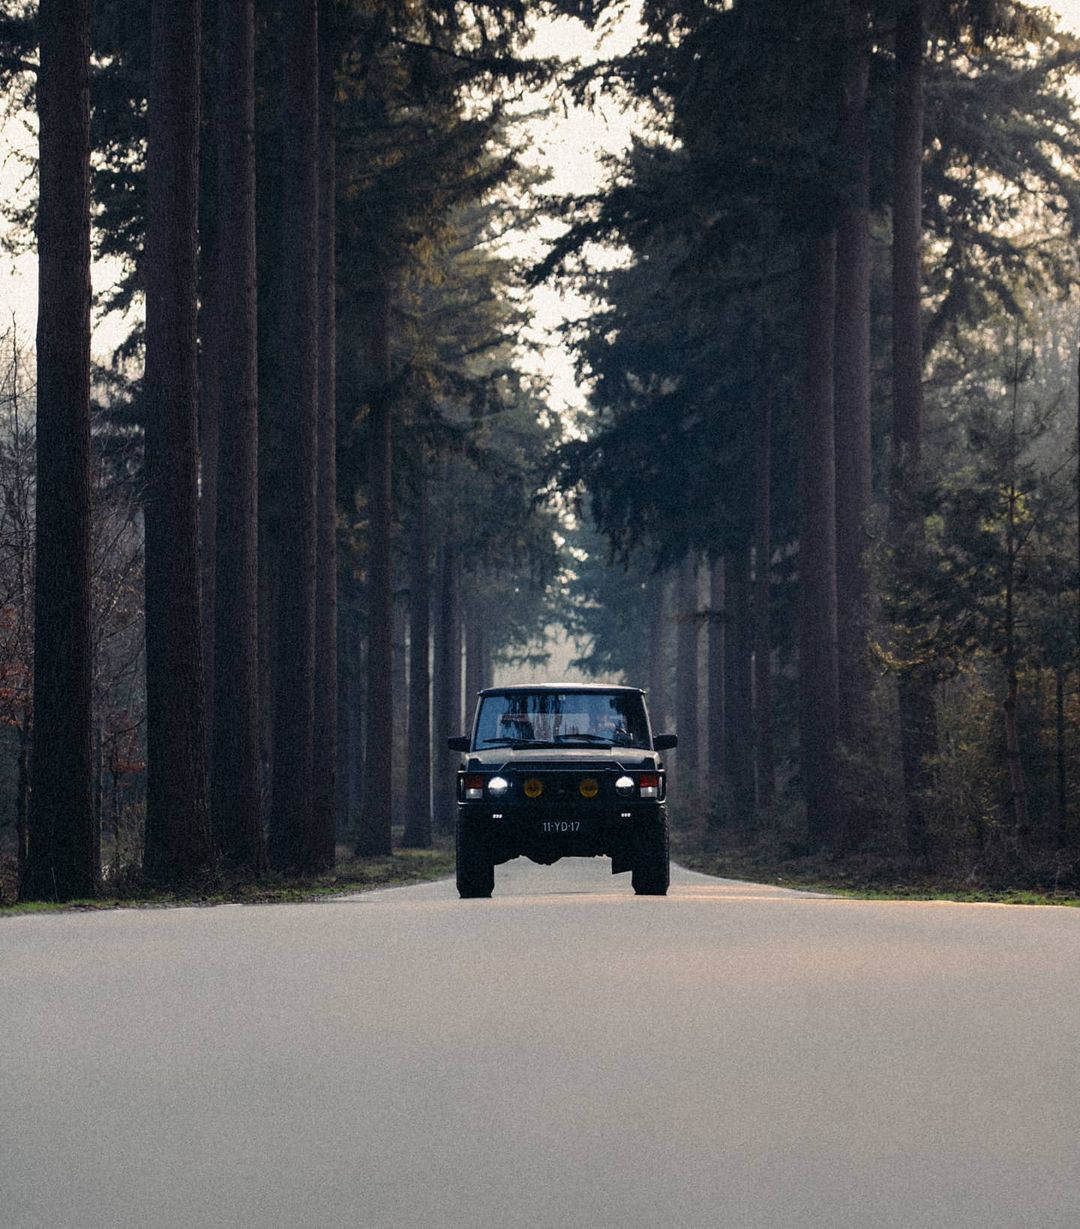 Vintage Range Rover road trip